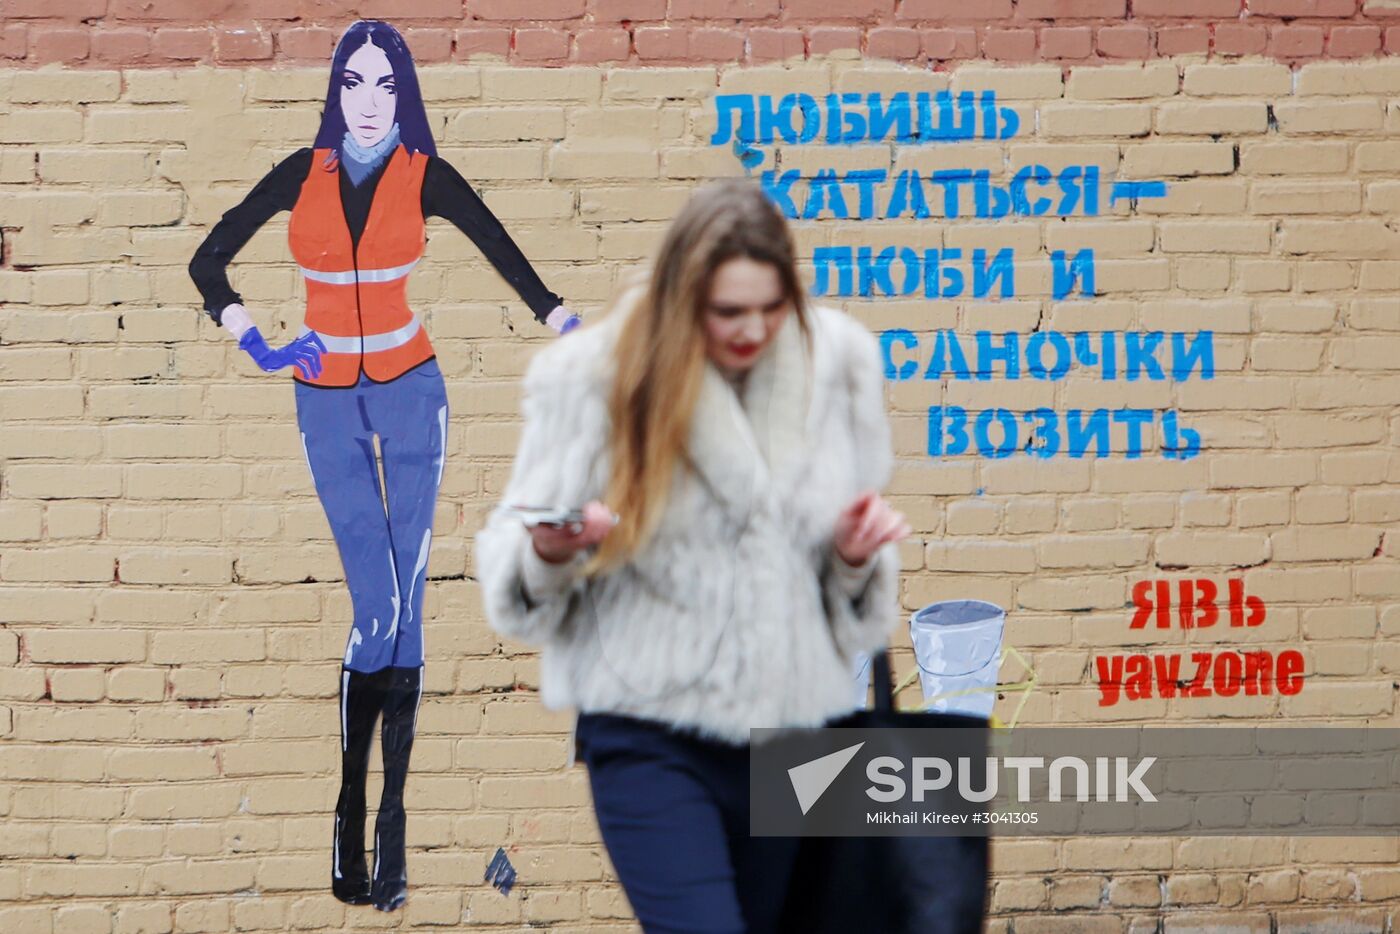 Mara Bagdasaryan portrayed as street cleaner on graffiti in Saint Petersburg